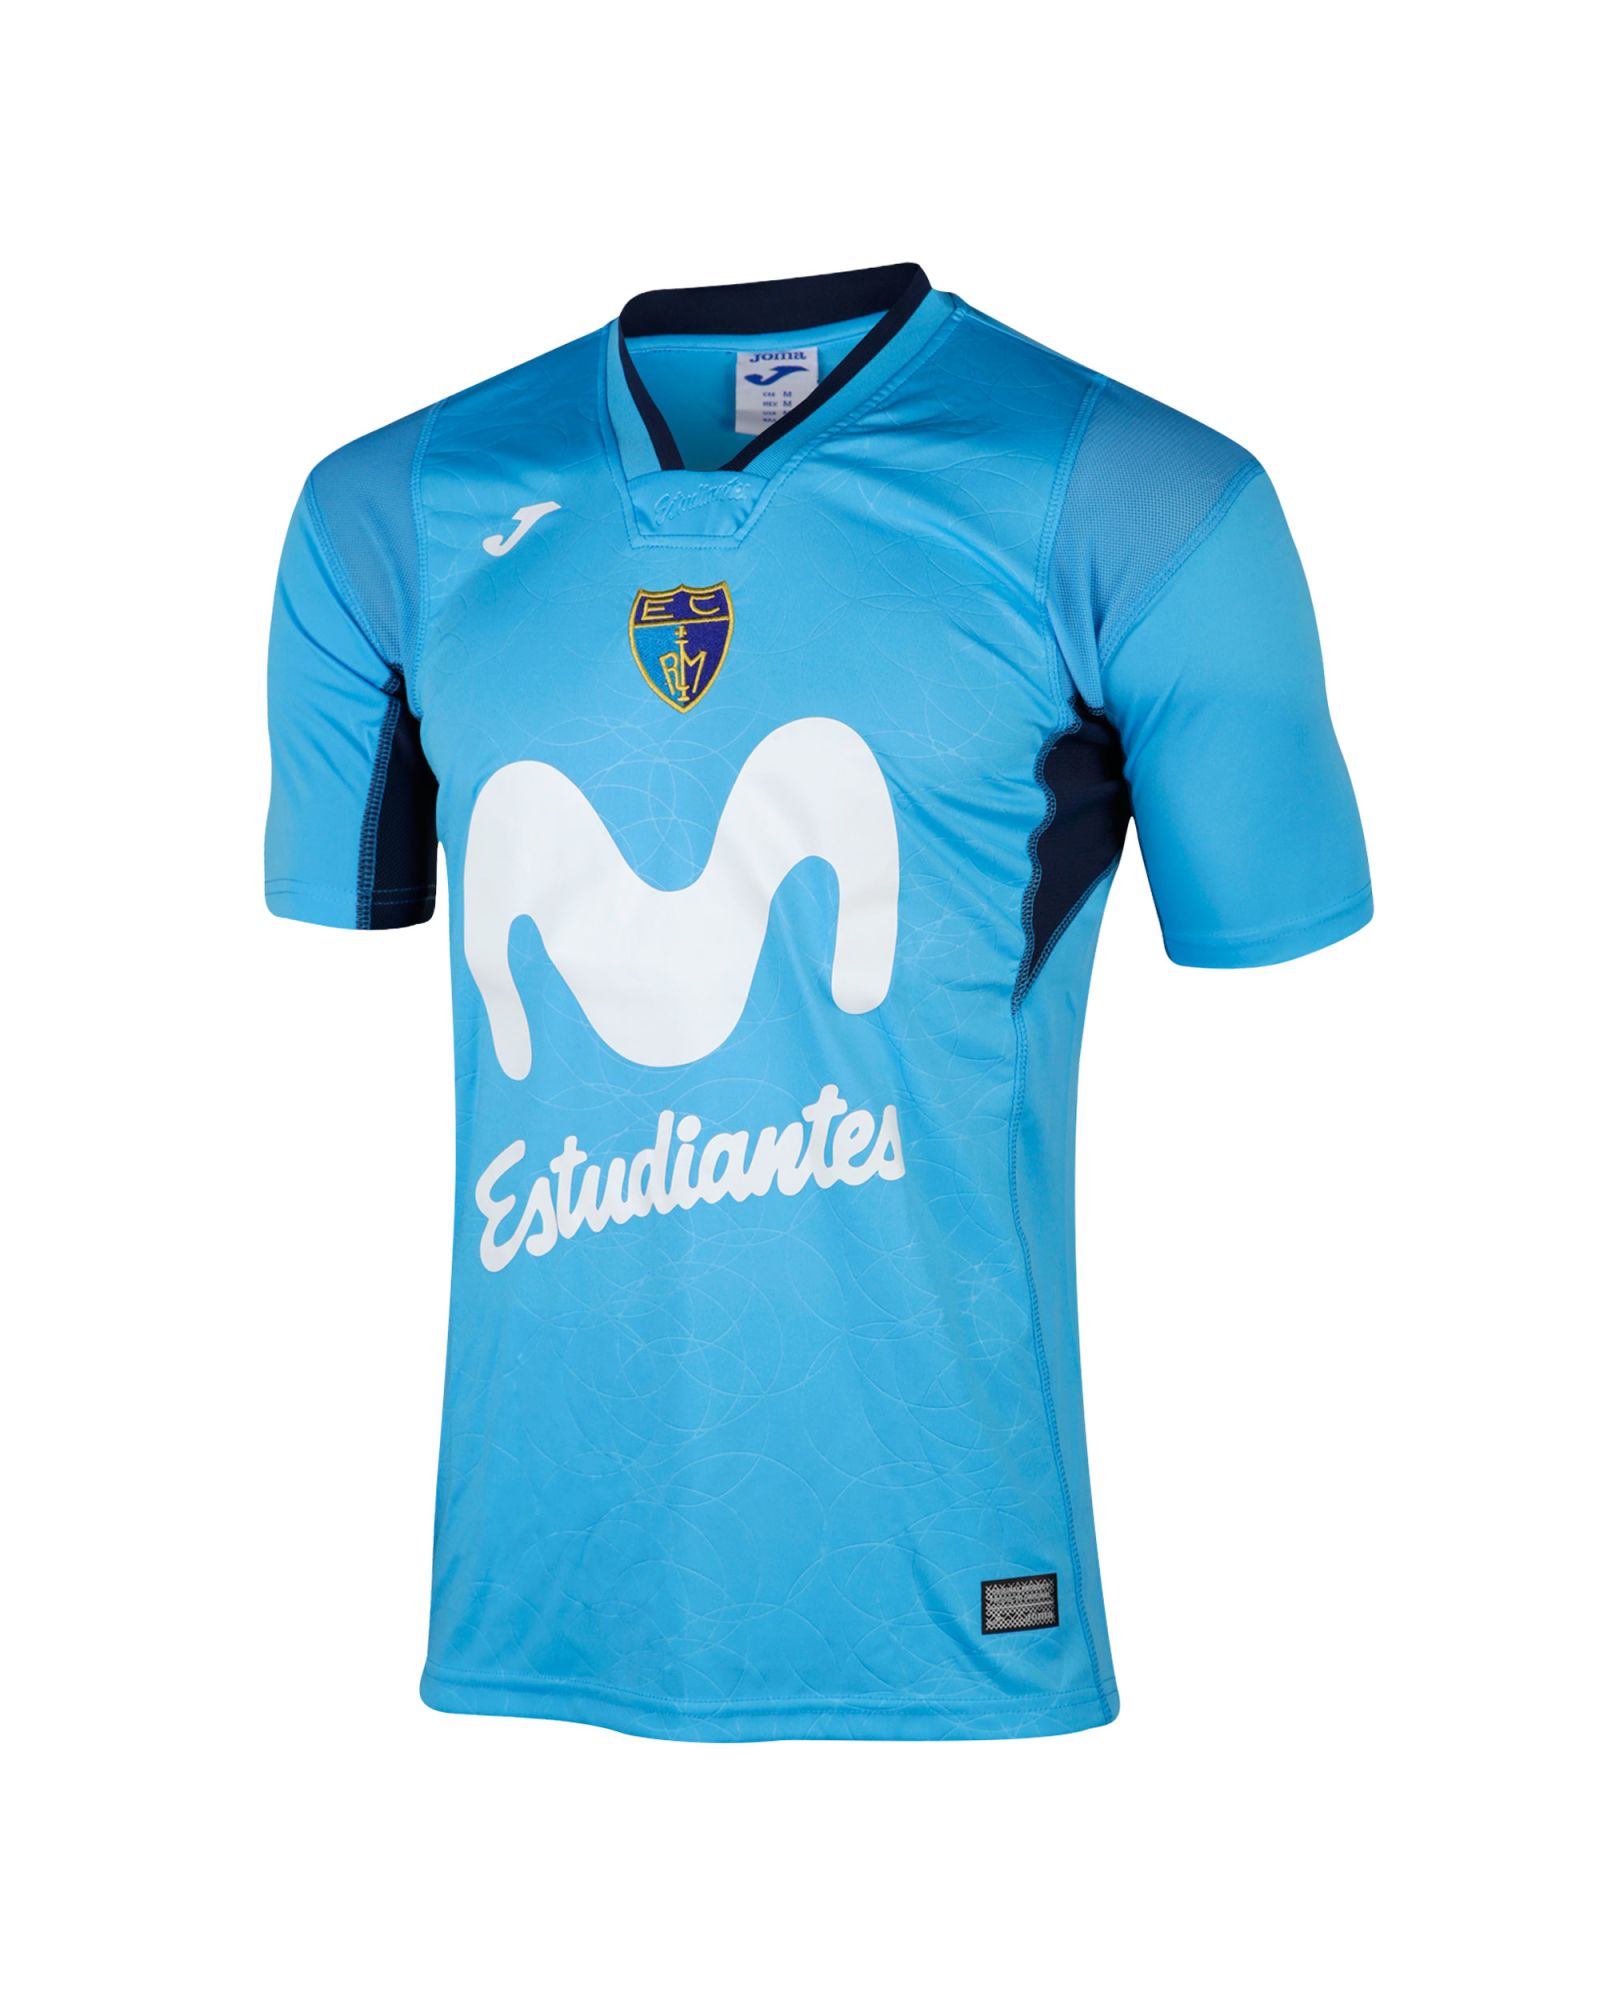 Camiseta 2ª CB Estudiantes 2018/2019 Azul - Fútbol Factory